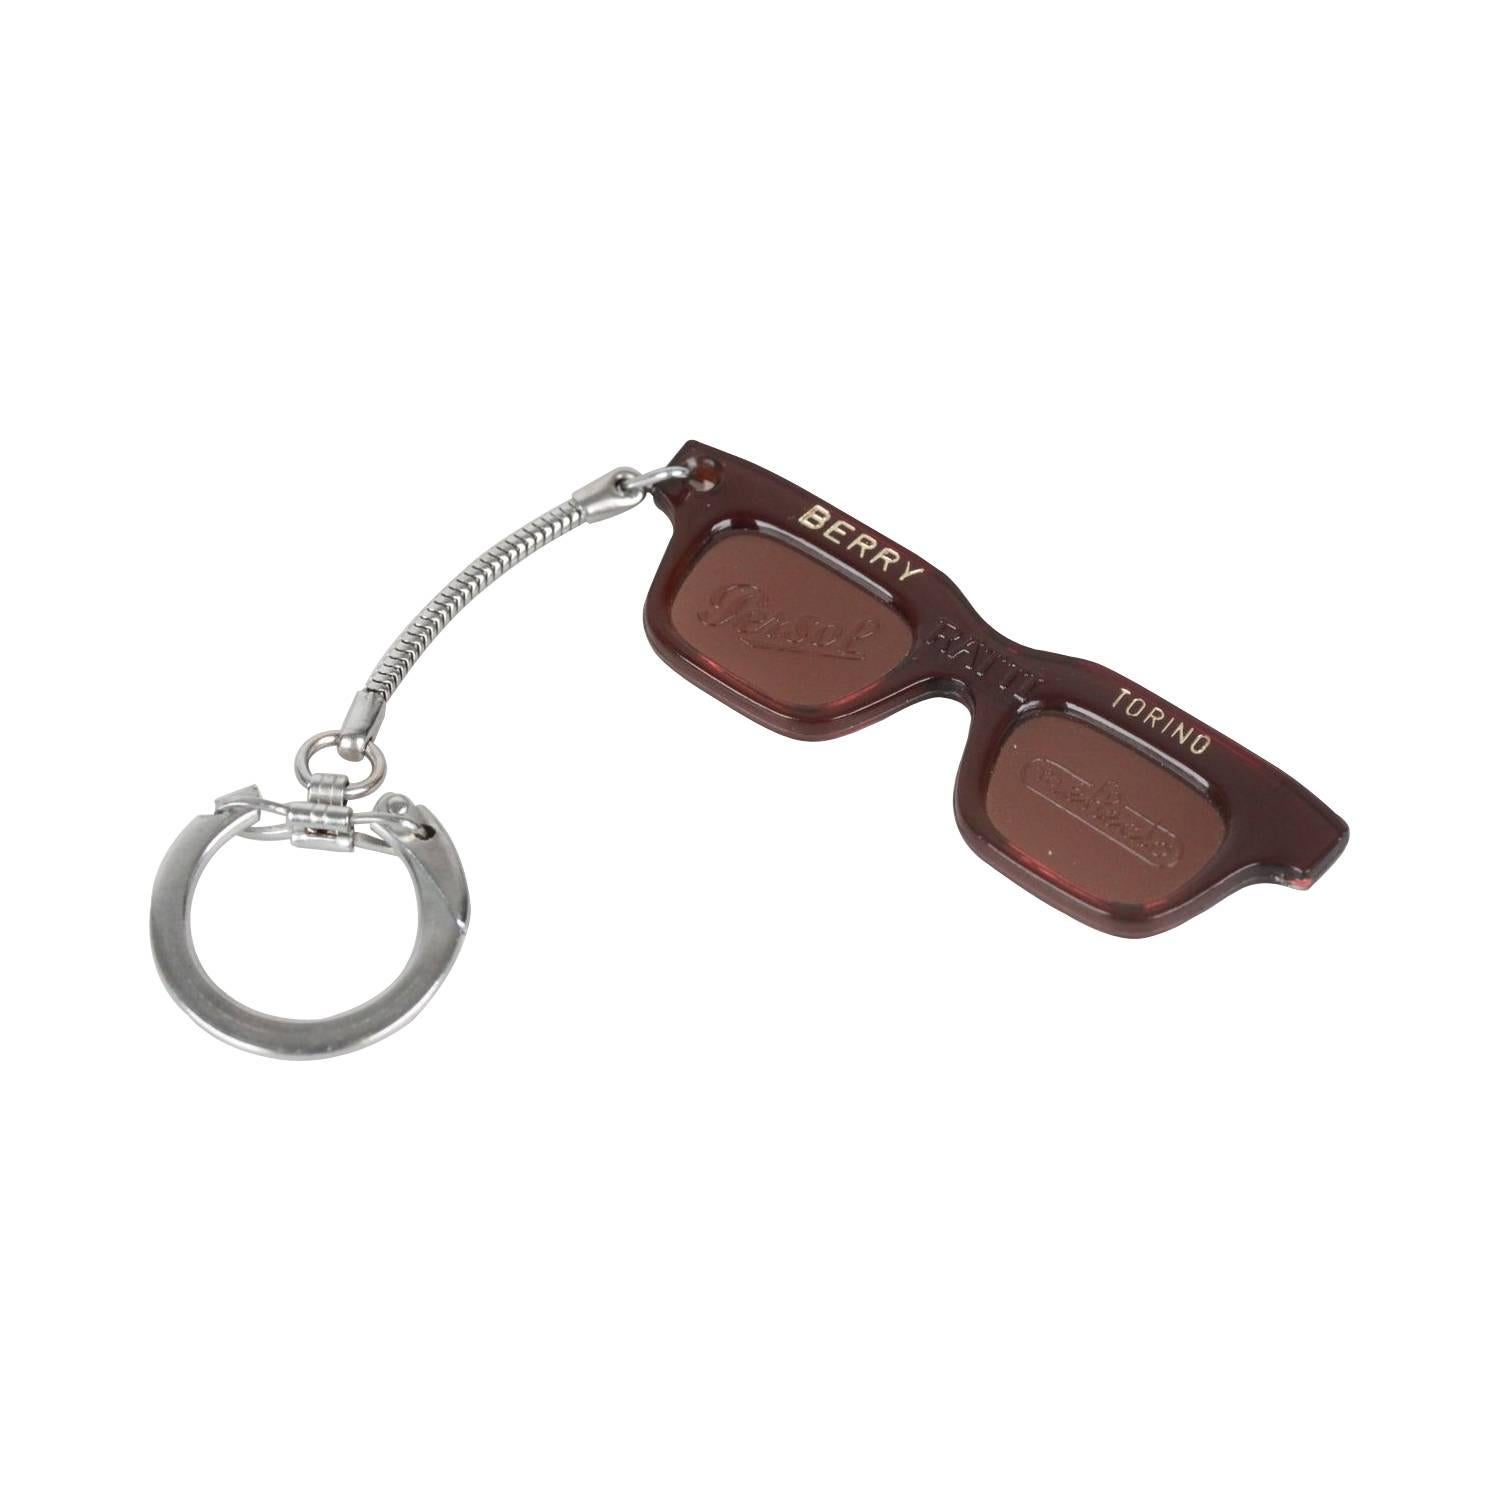 Persol Ratti Berry Torino Vintage Sunglasses Keyring Charm For Sale